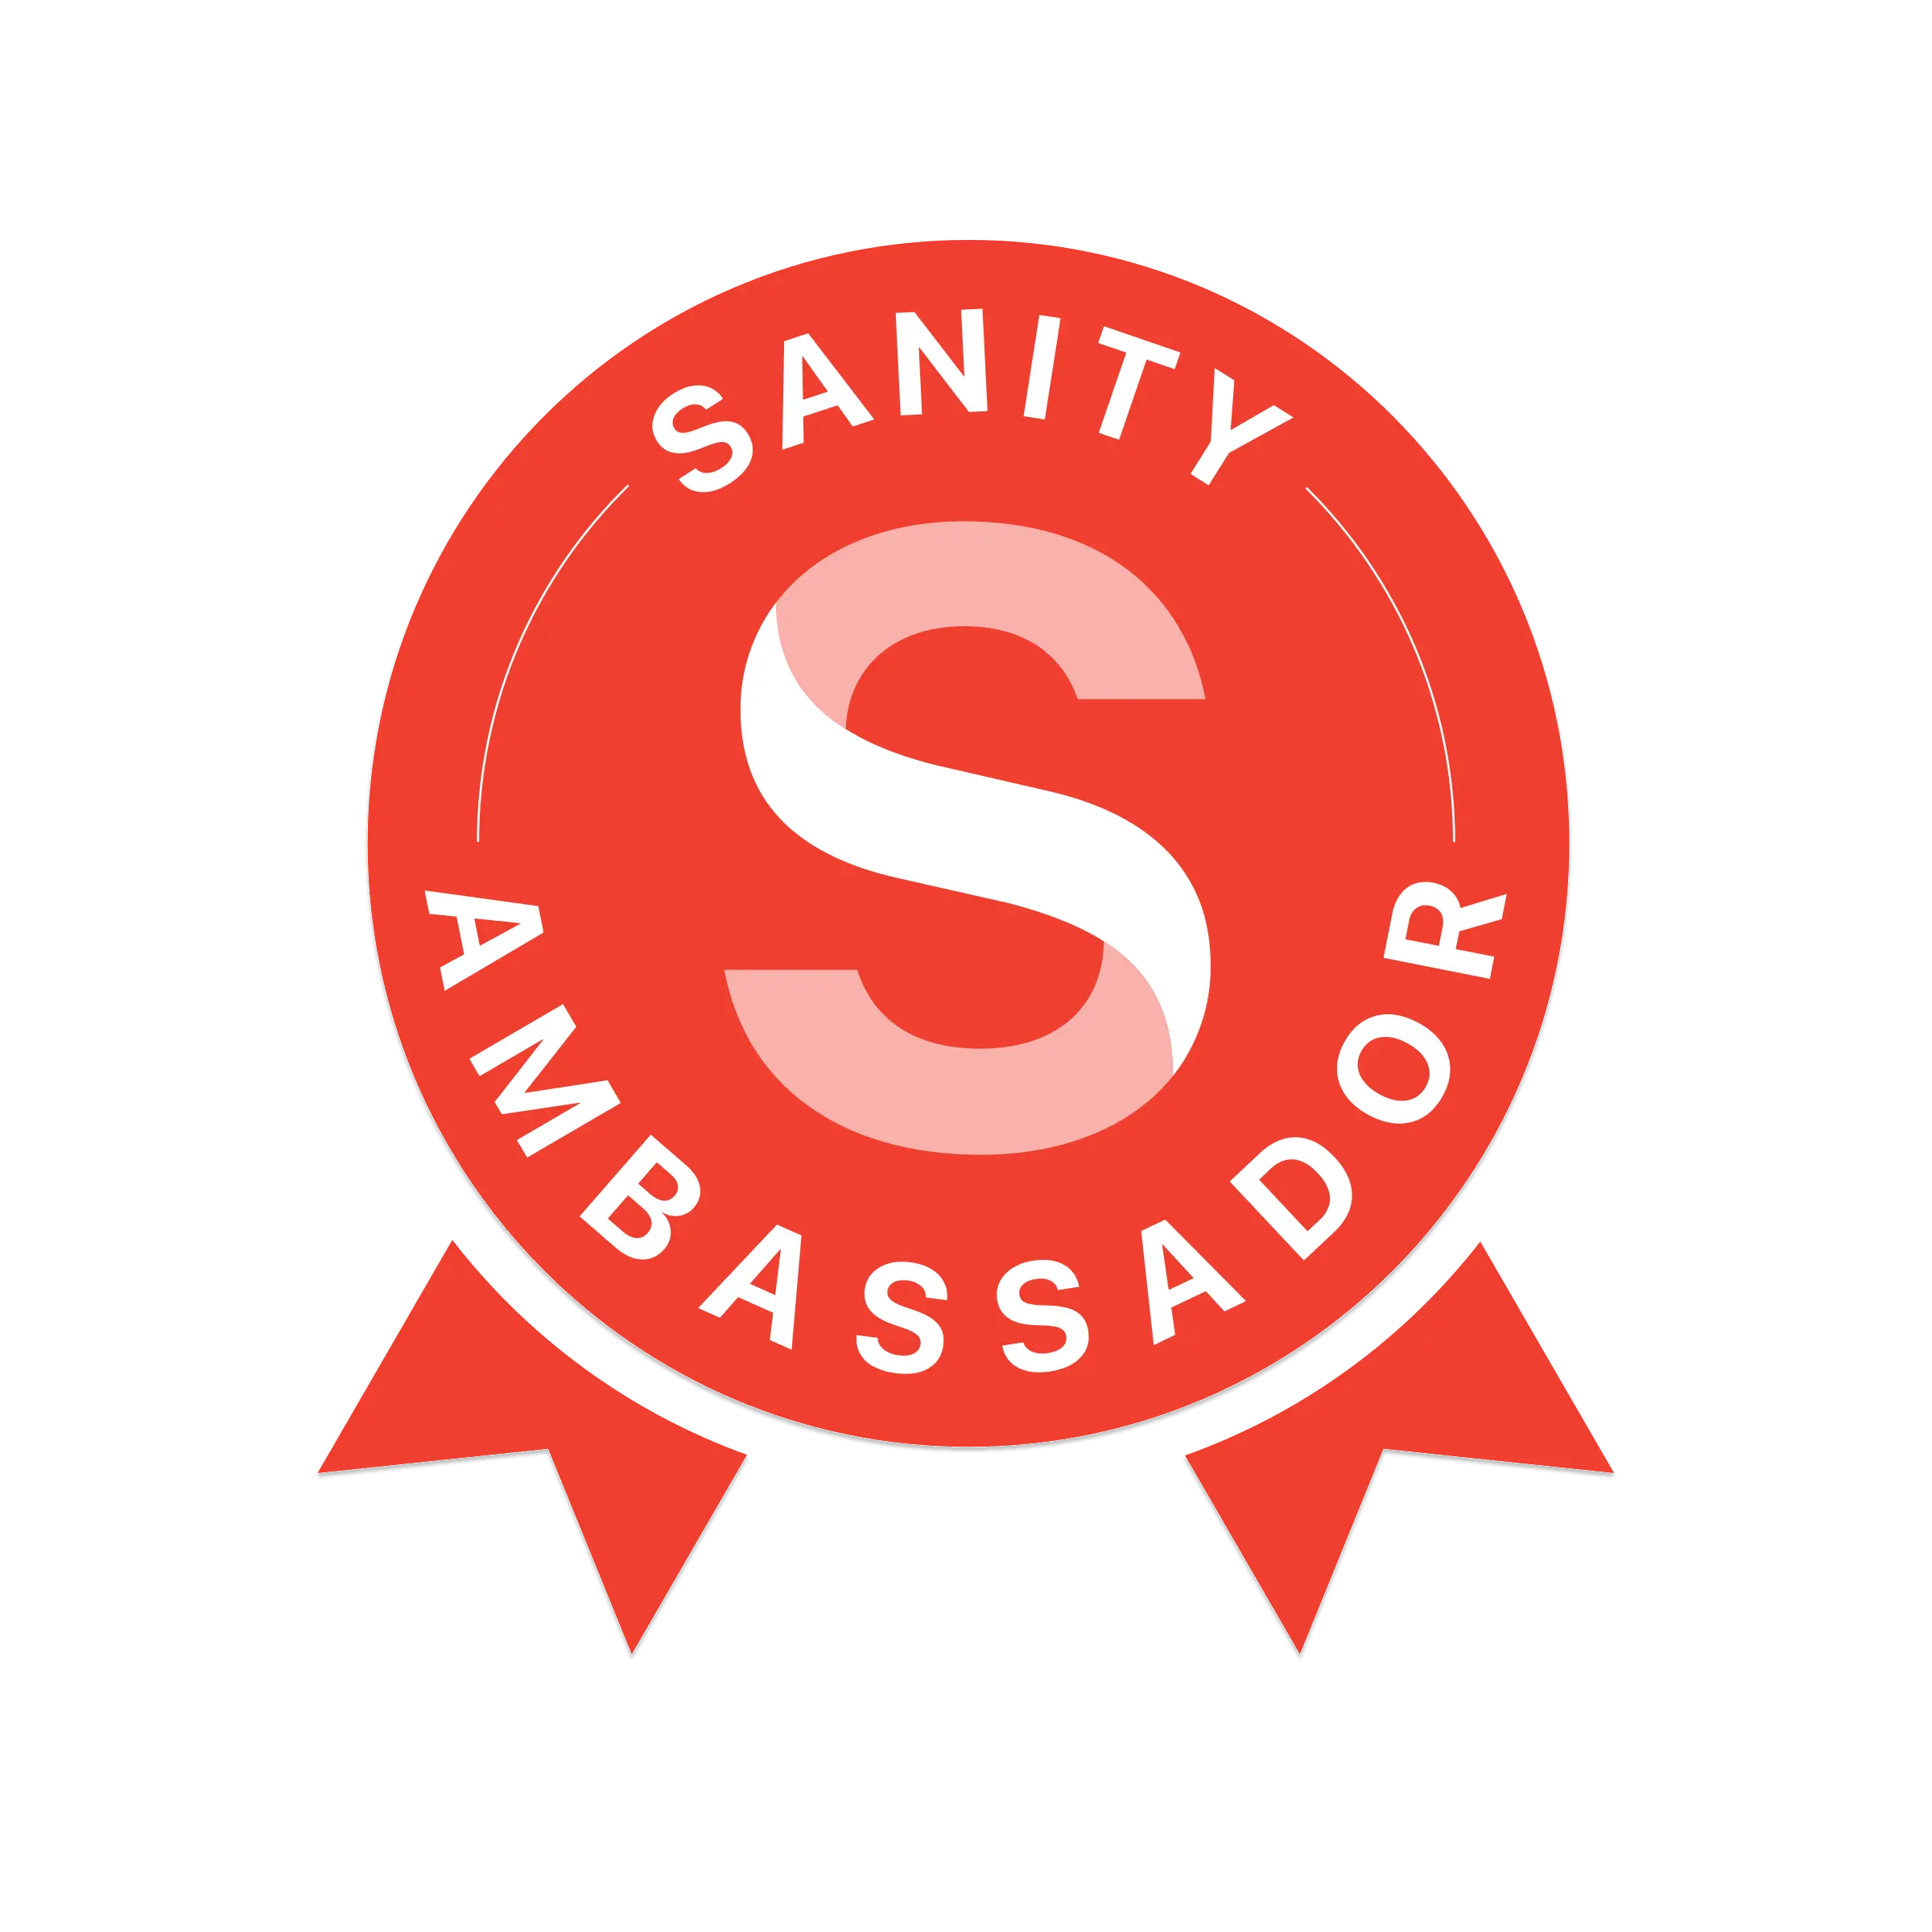 Sanity community ambassador badge